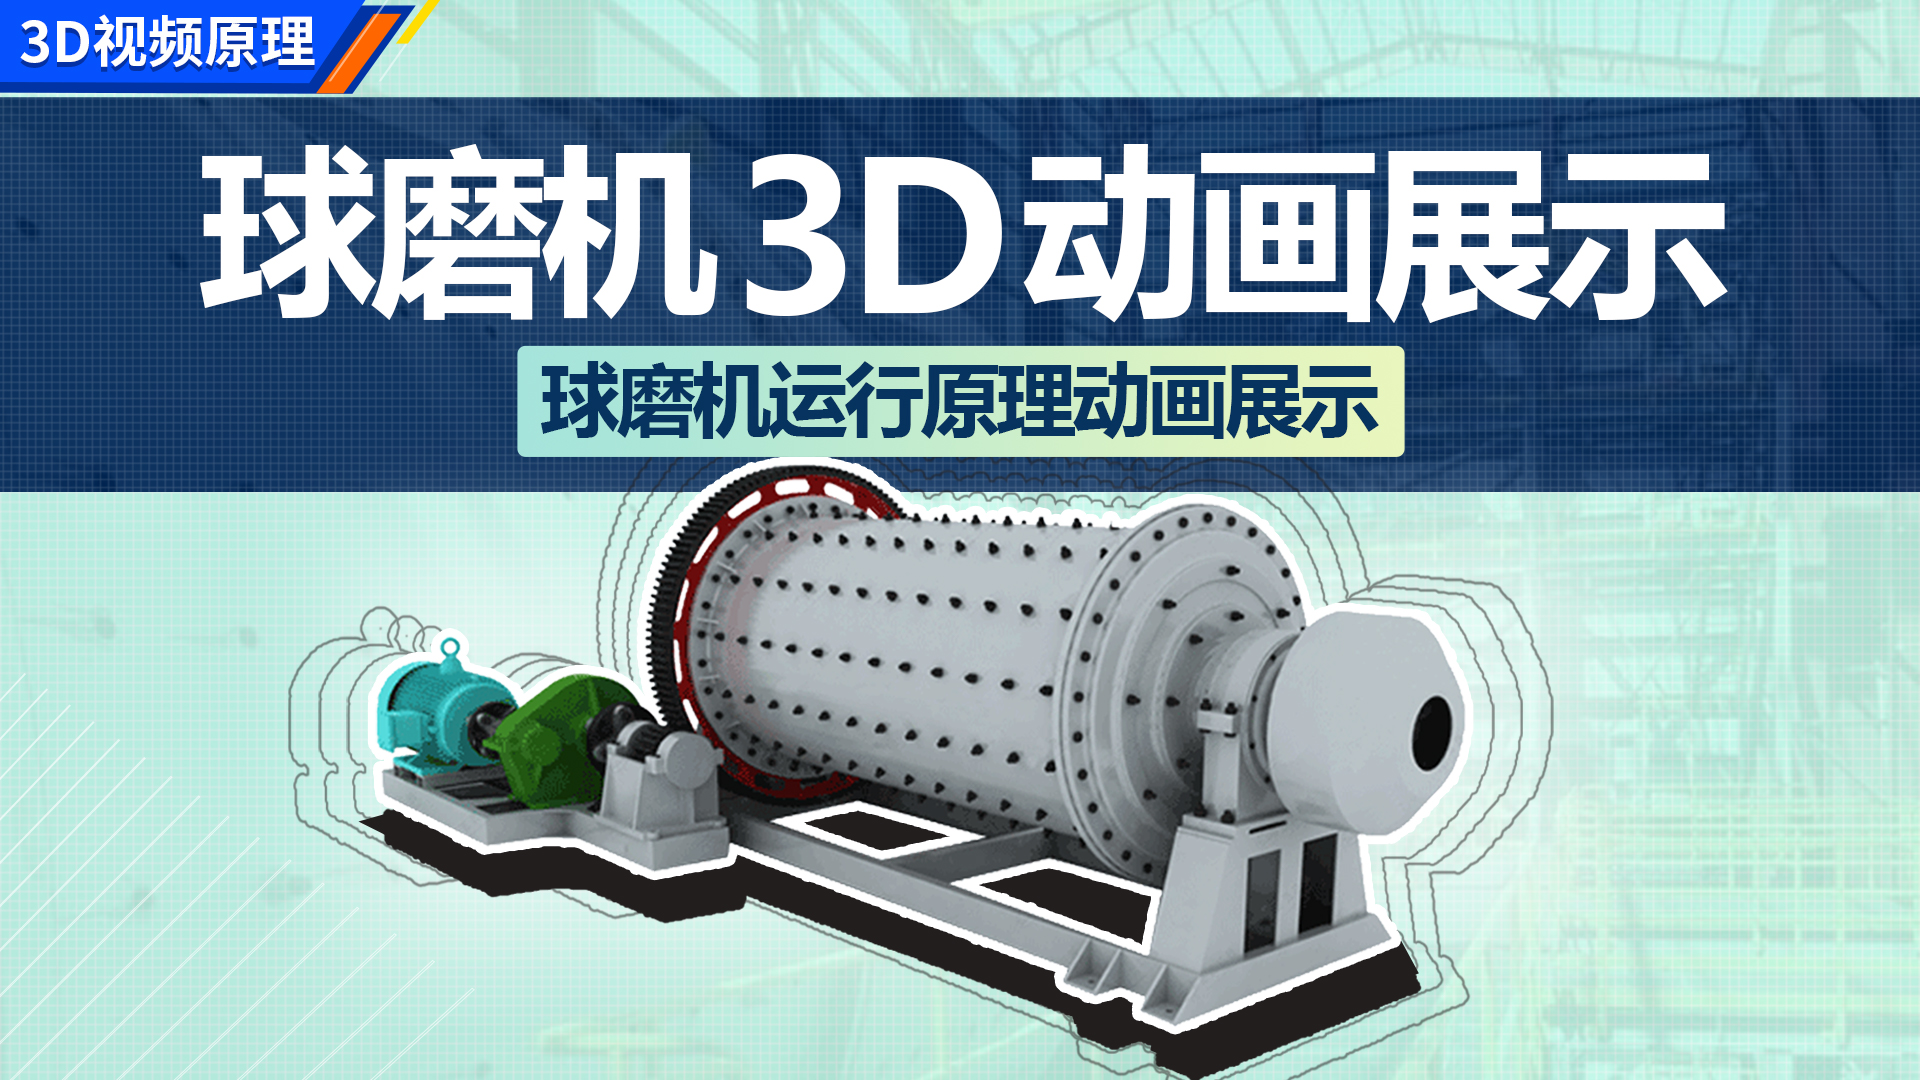 3D动画展示球磨机运行原理